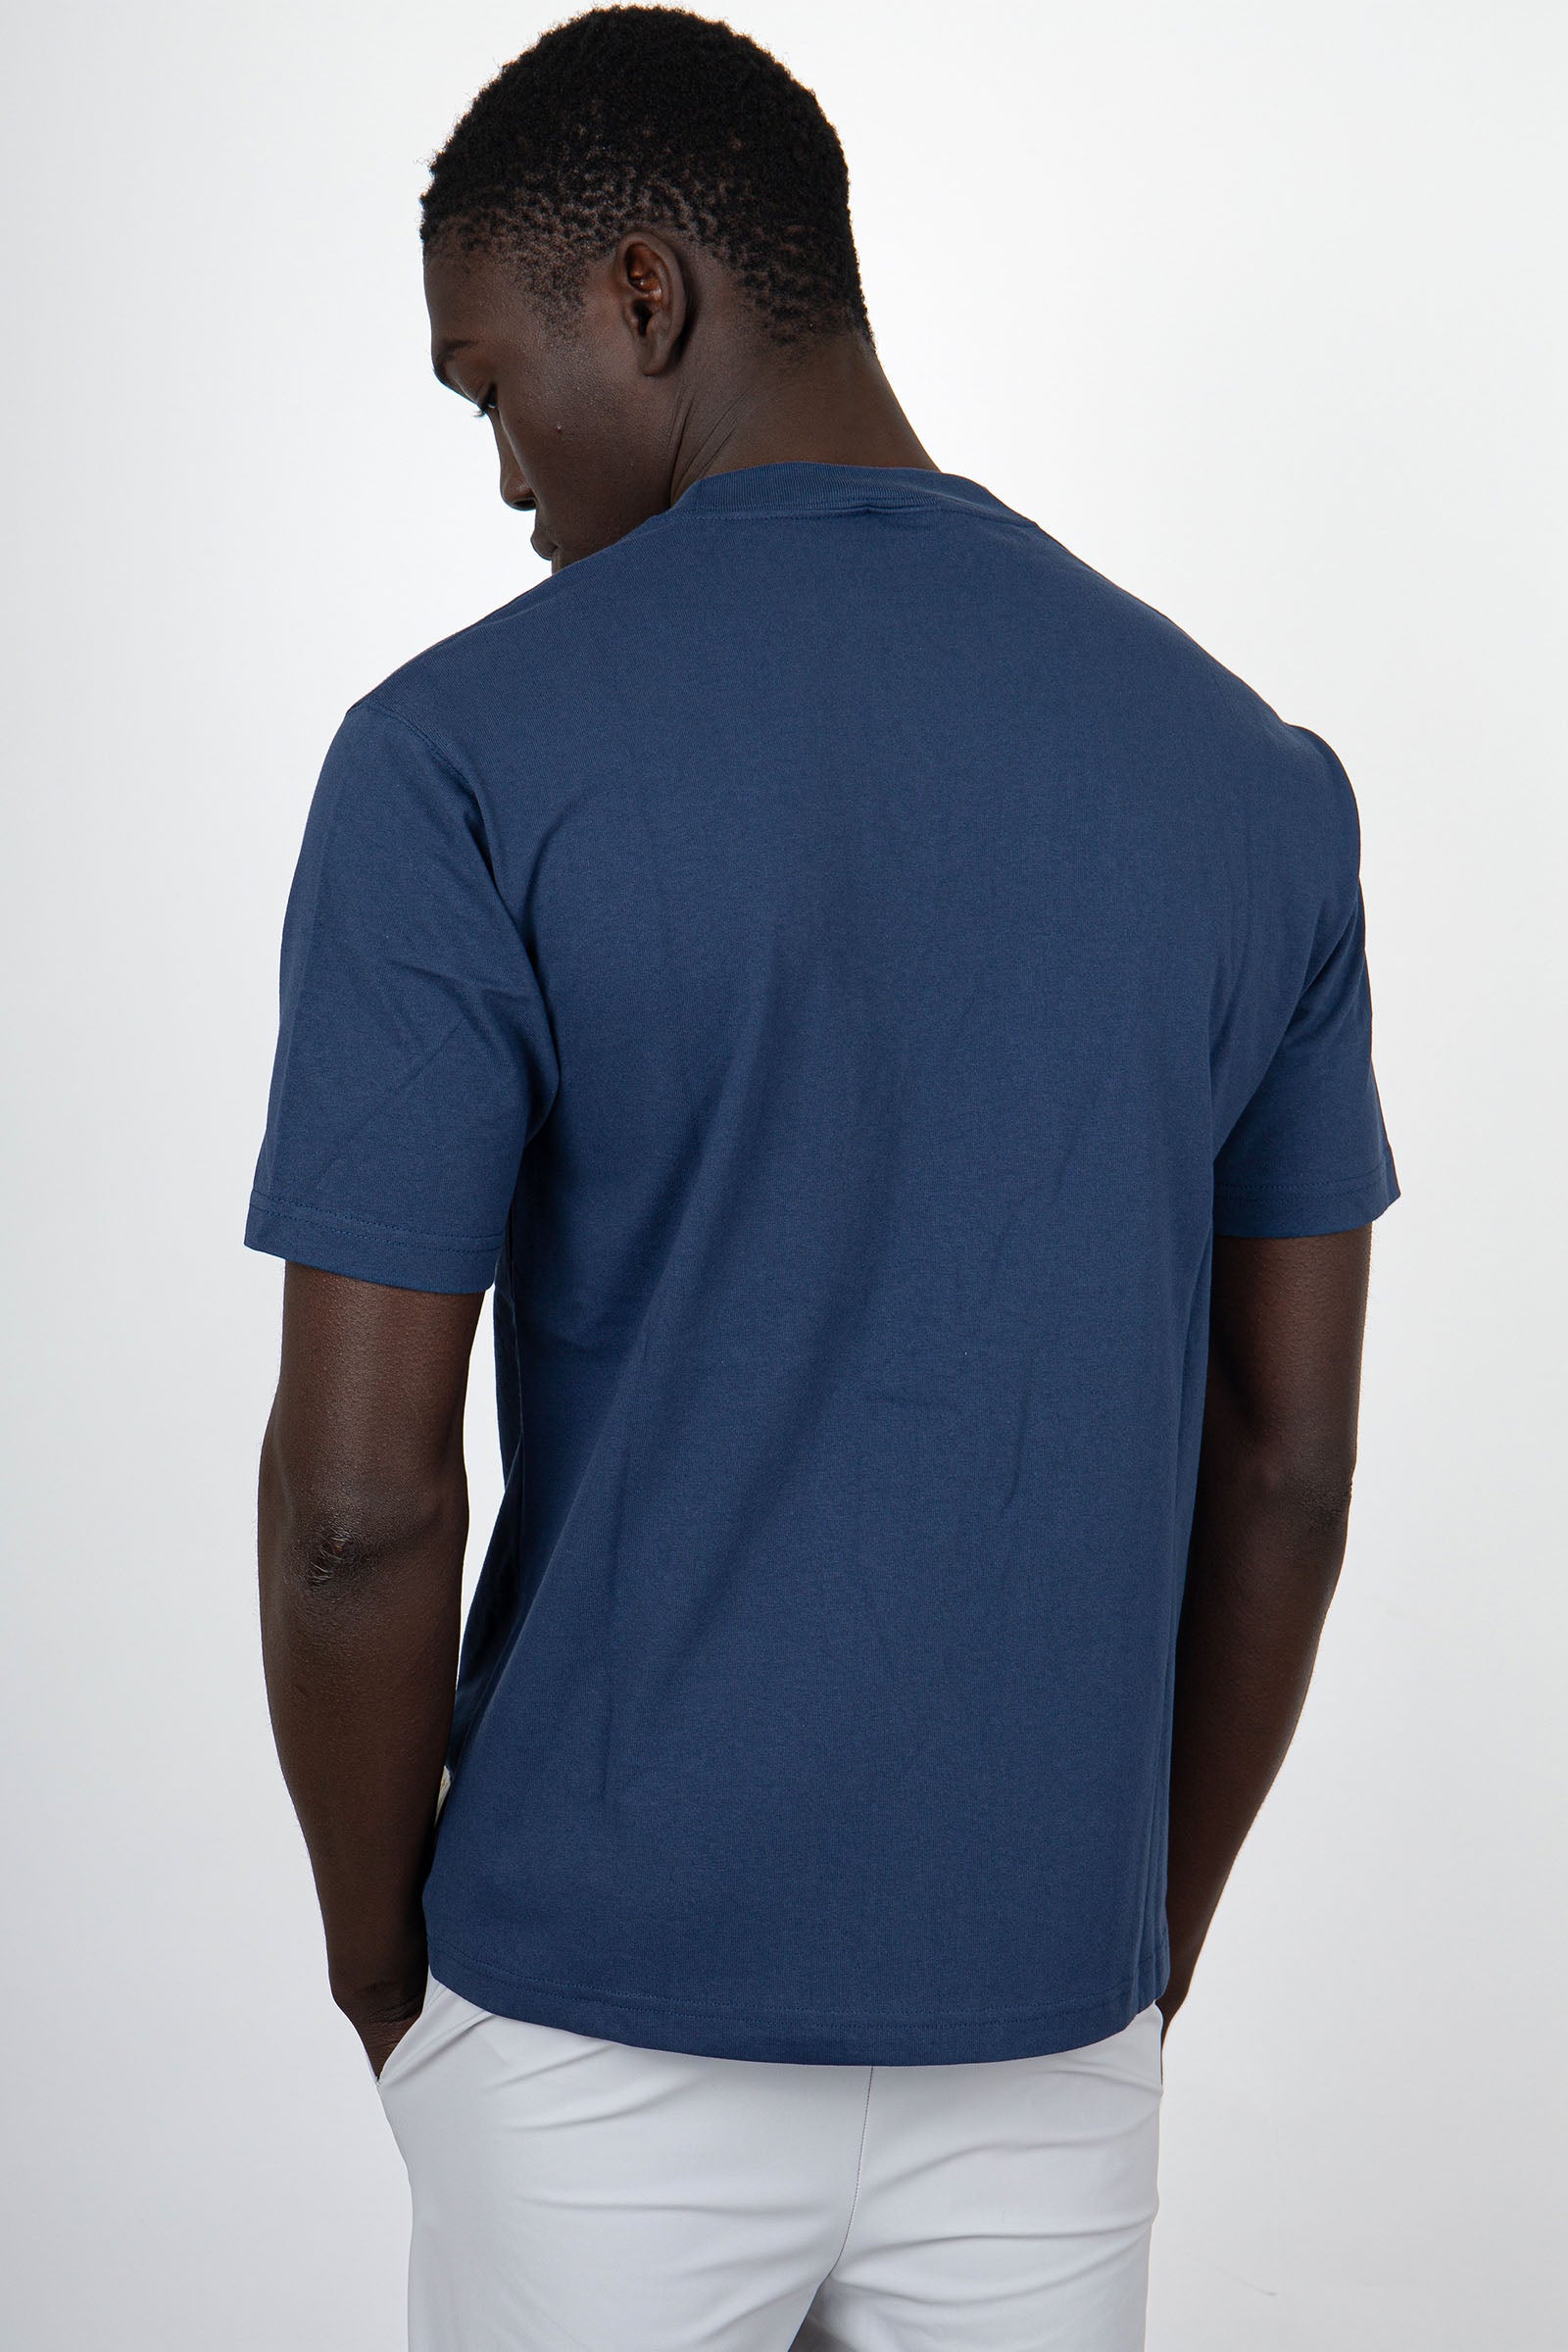 New Balance T-Shirt Sportswear Greatest Hits Cotone Blu Navy - 4